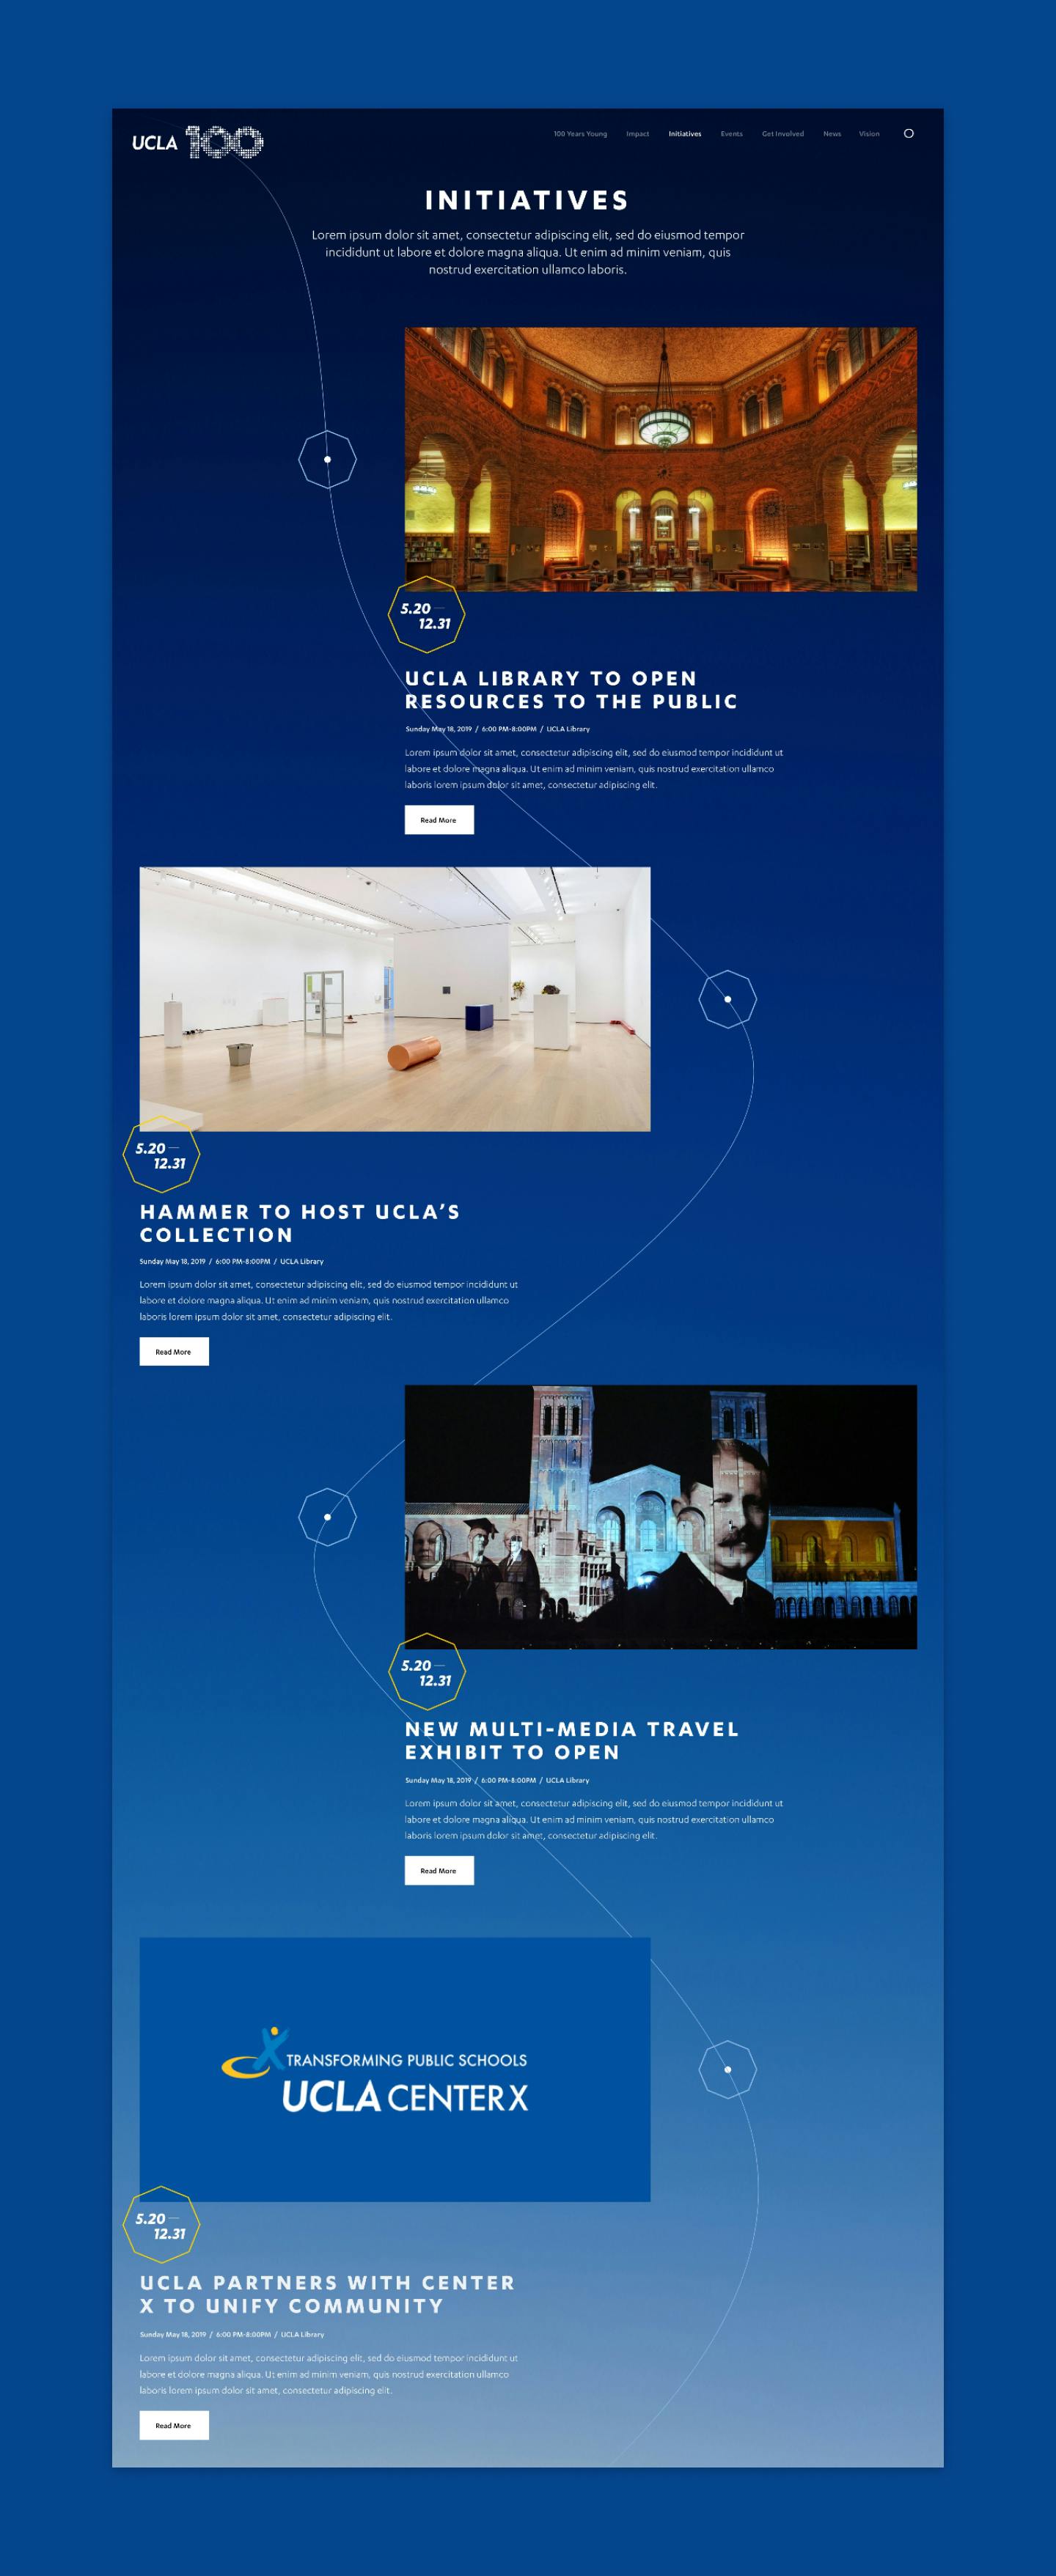 Screenshot of UCLA 100 initiatives page